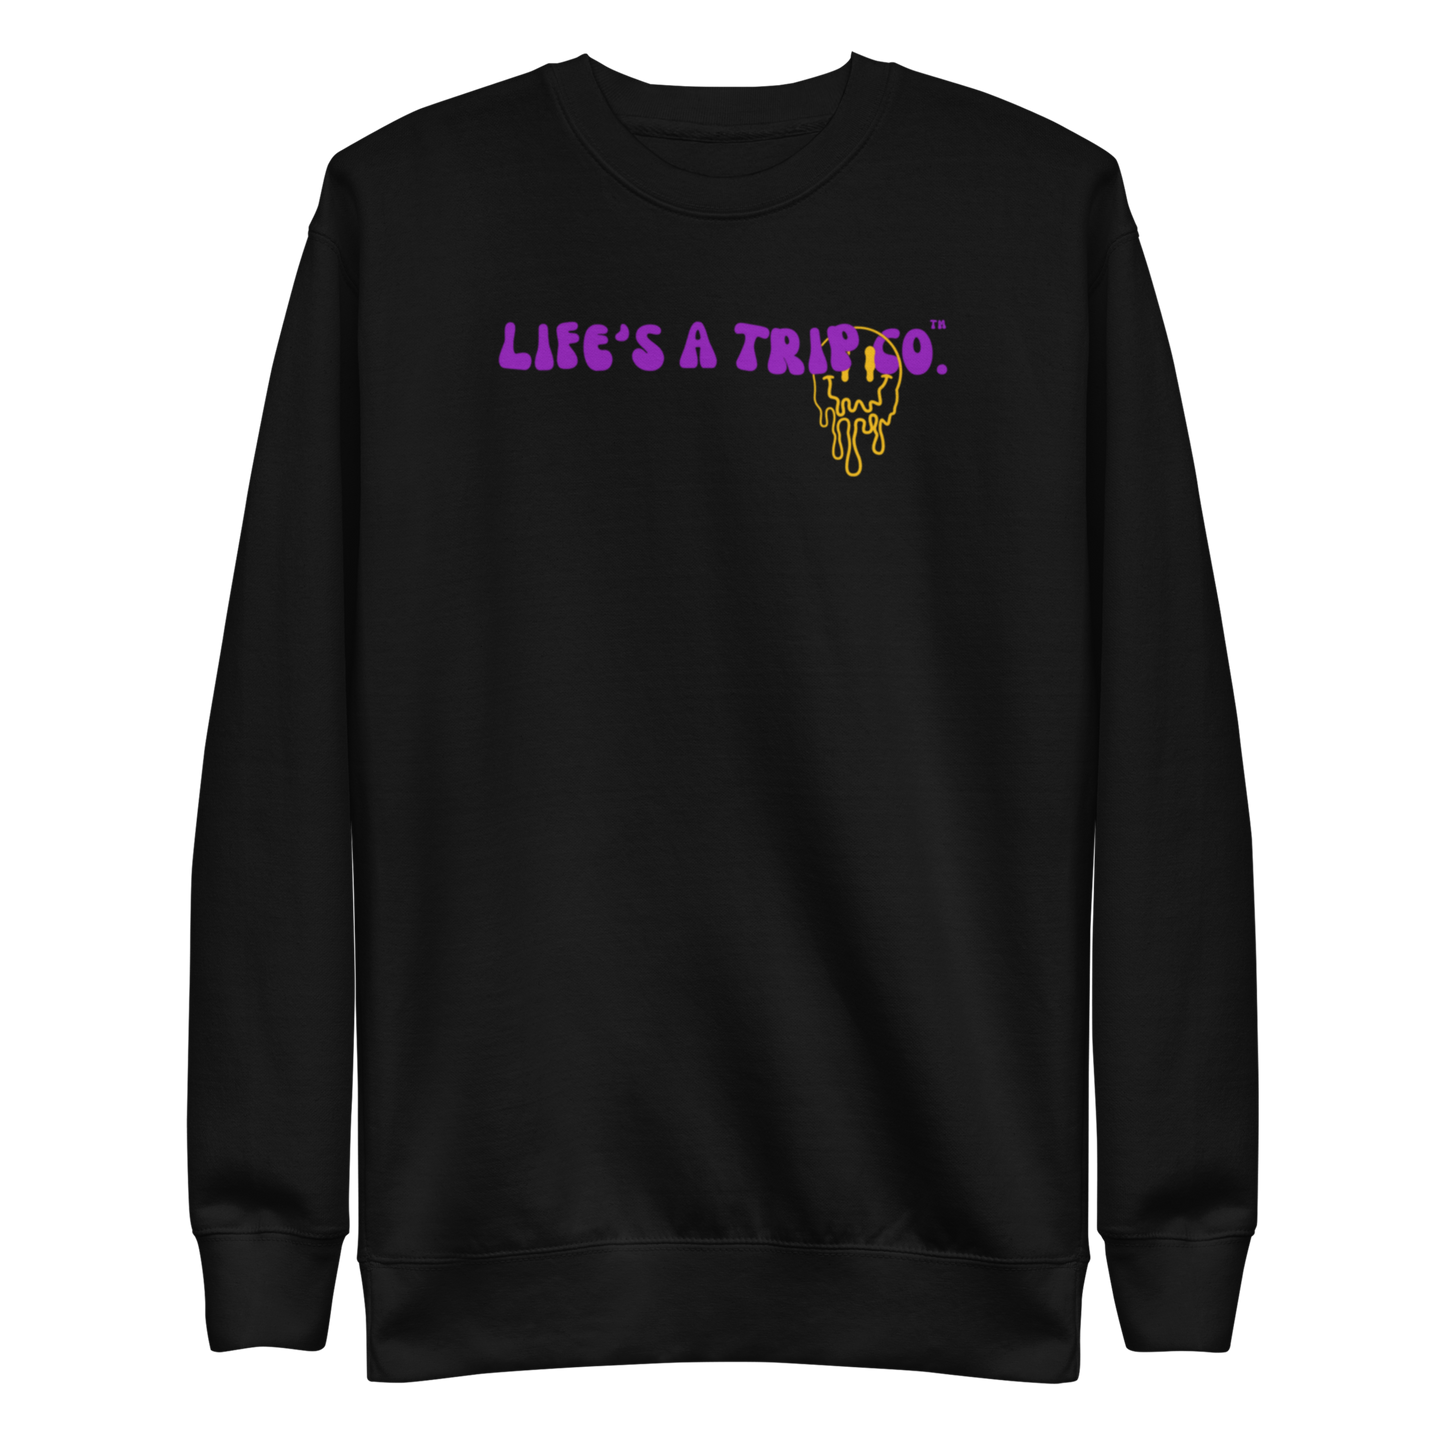 Life's a Trip Co.™ Stay Weird Premium Sweatshirt | Cotton Heritage M2480